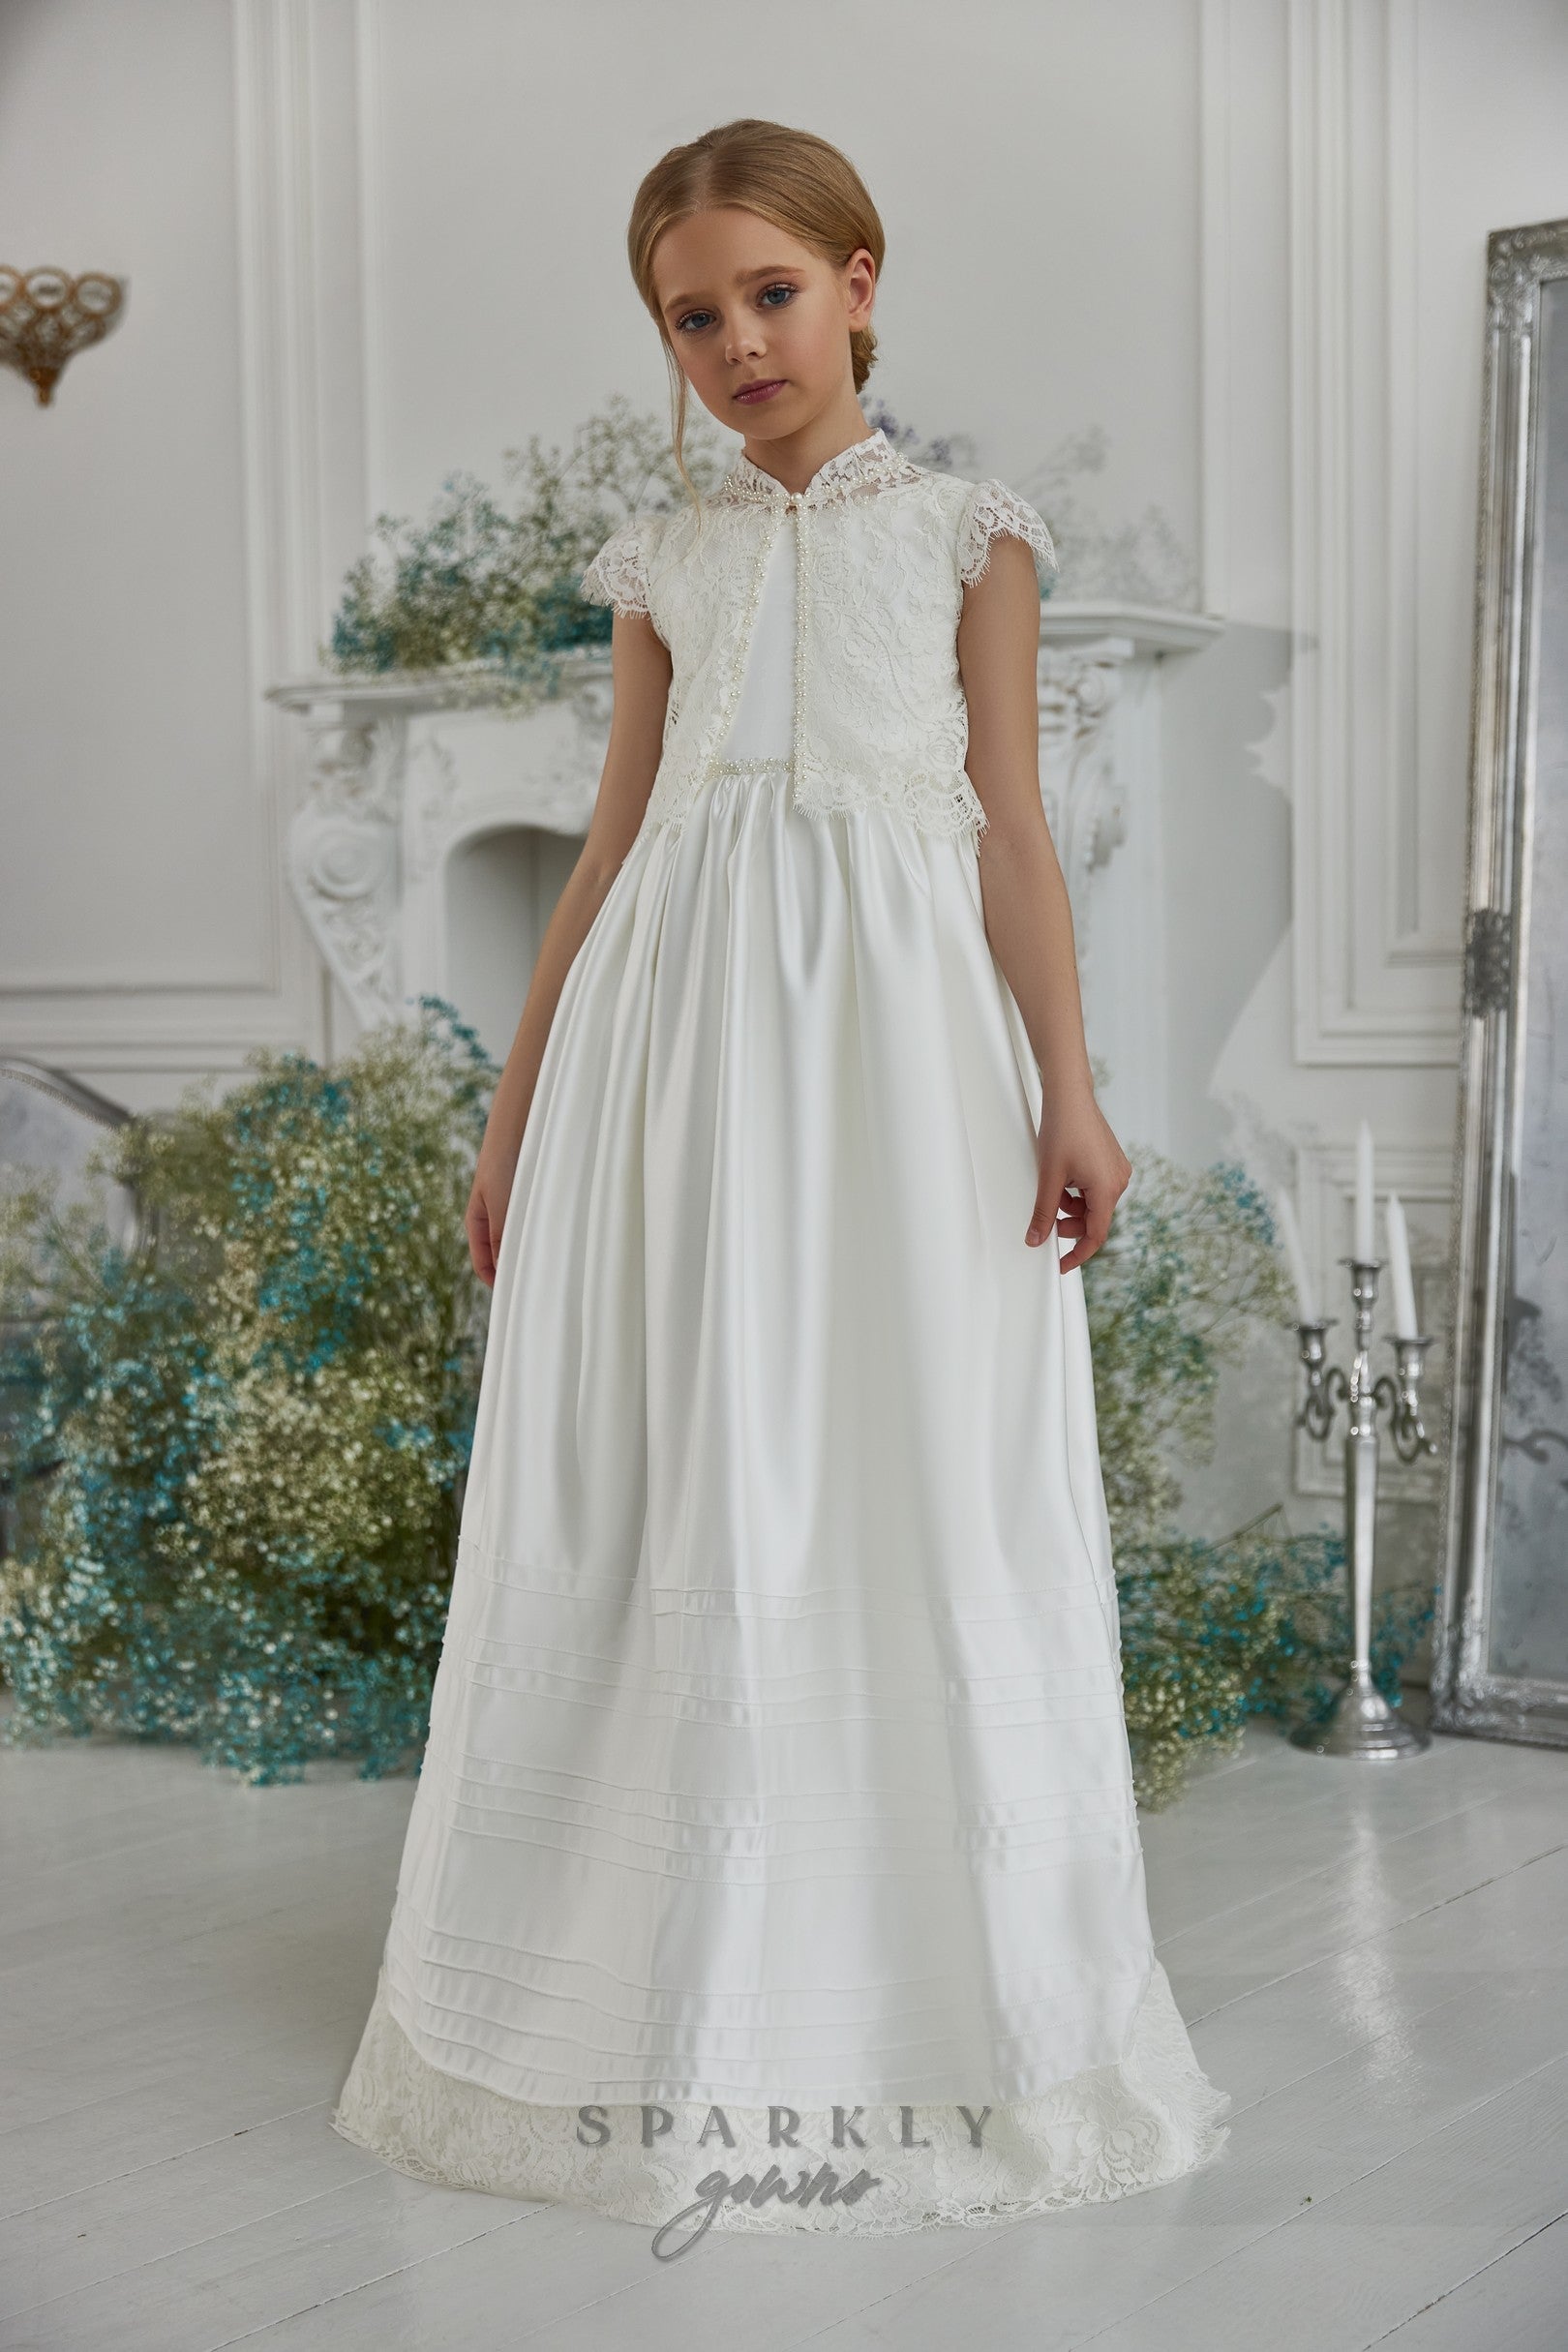 uukiA Child Girl 2-11 Years Embroidered Mesh Sequined Petal Sleeve Fashion  Party Wedding Dress - Walmart.com